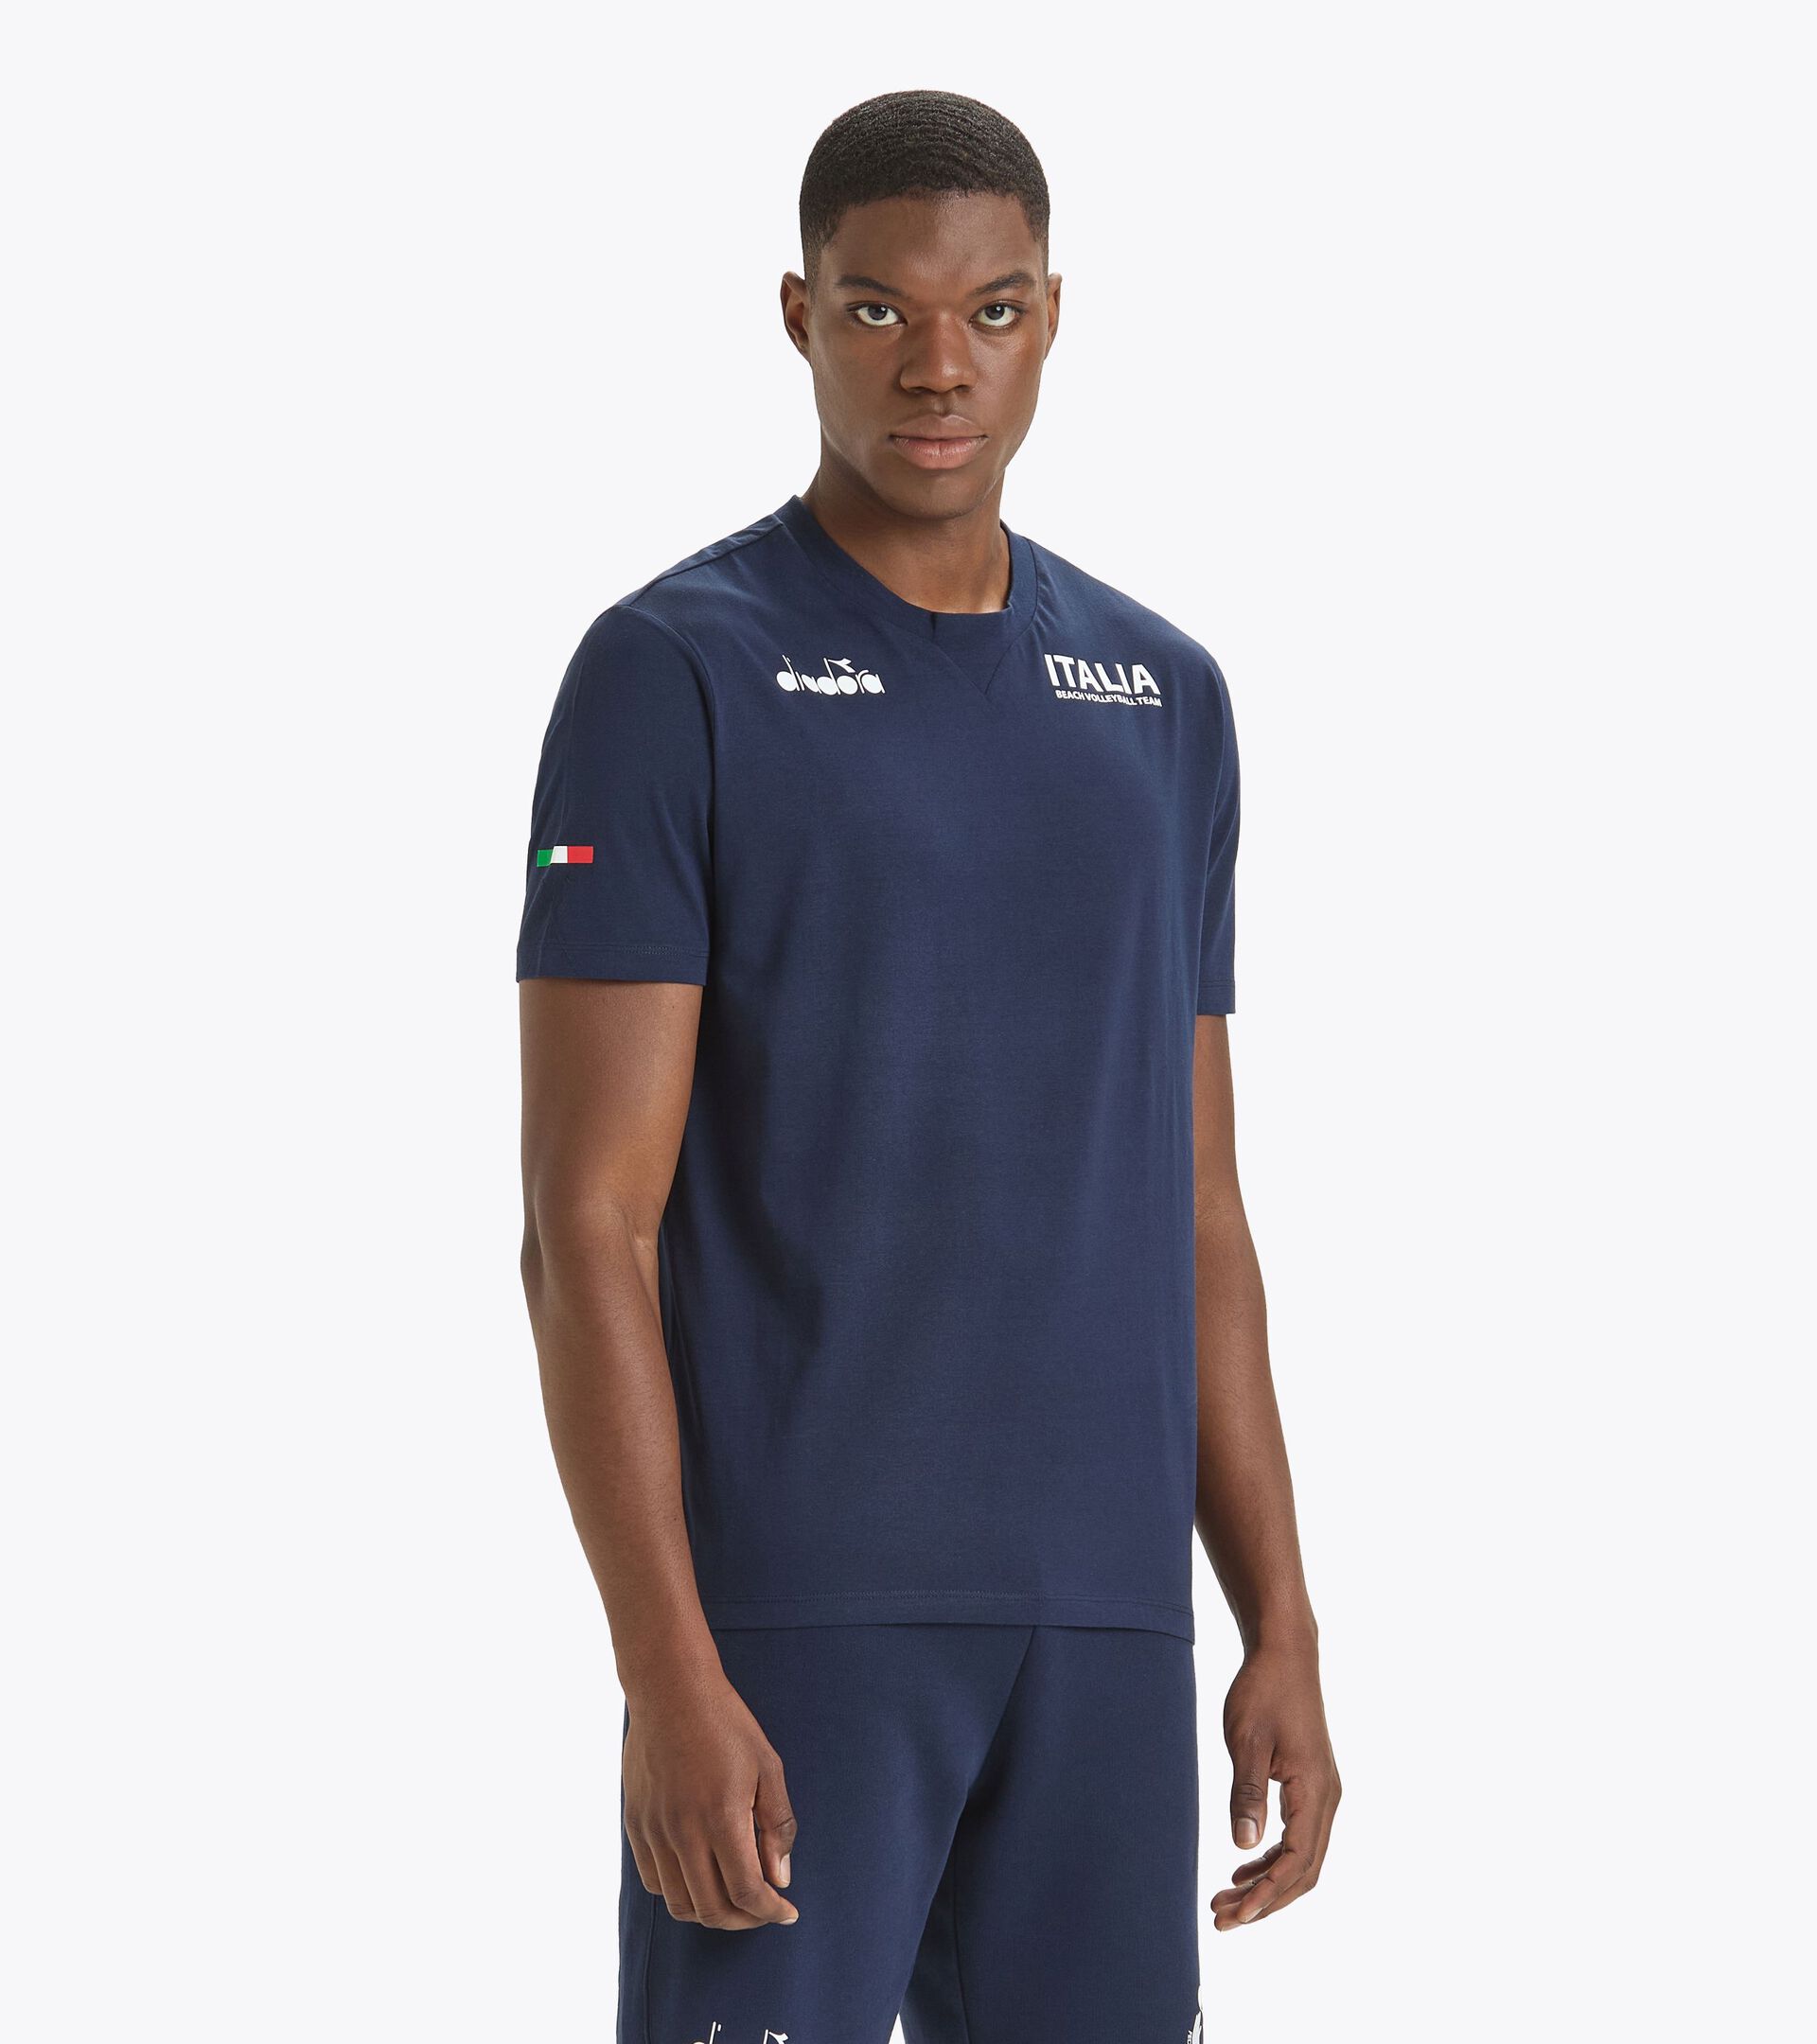 Representative t-shirt - Italy National Volleyball Team T-SHIRT RAPPRESENTANZA BV24 ITALIA CLASSIC NAVY - Diadora